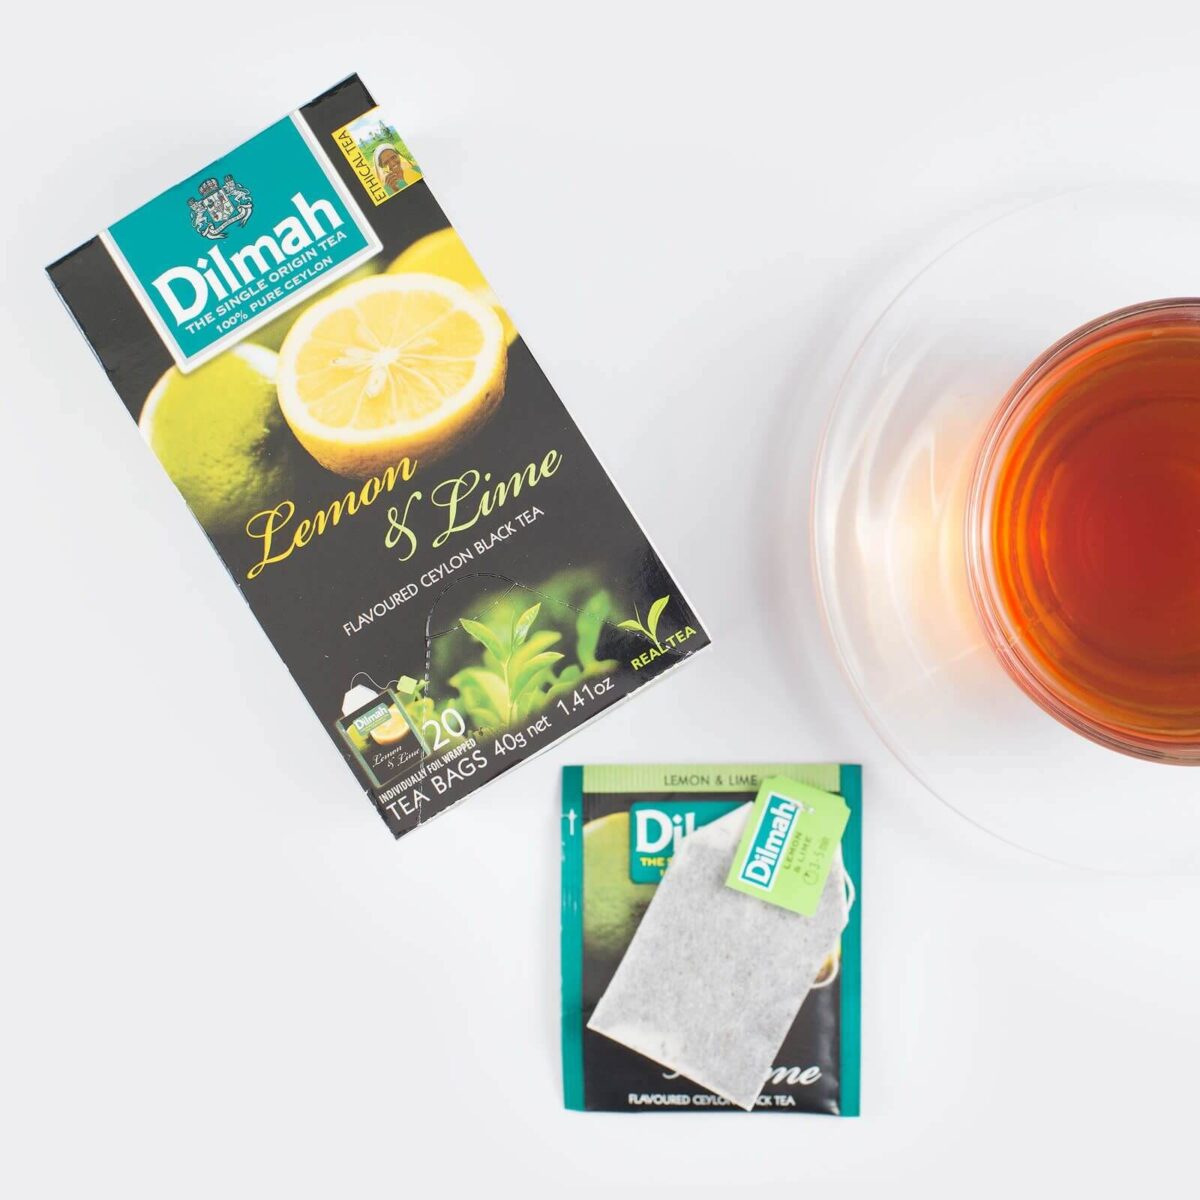 Dilmah Lemon-and-Lime flavored ceylon black tea